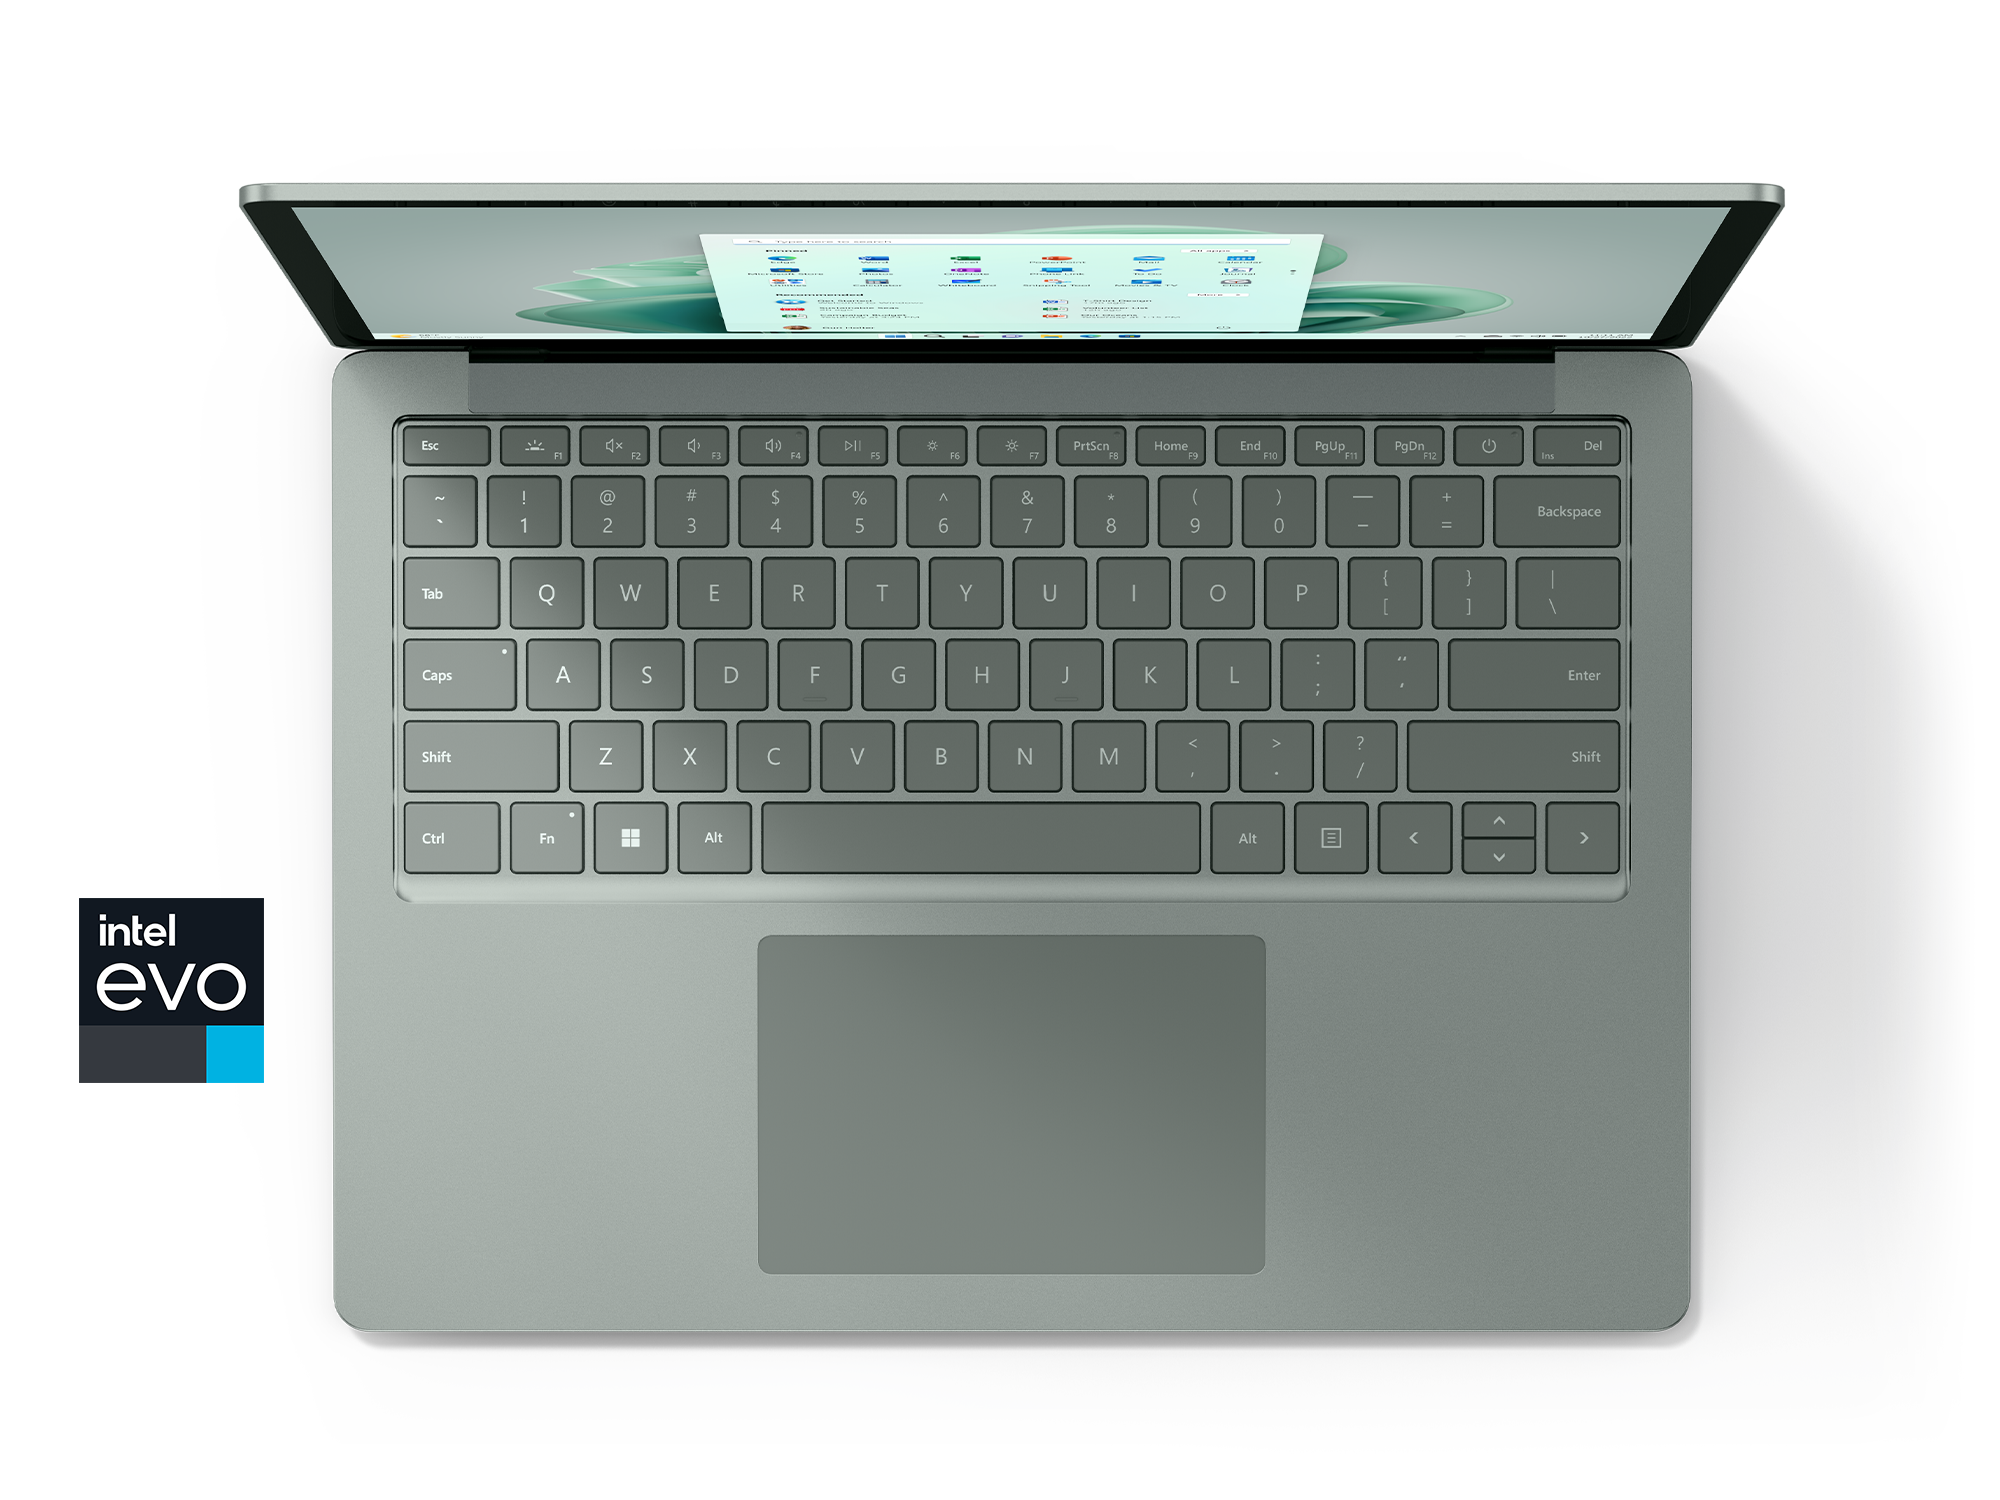 MicroSoft ノートPC Surface Laptop